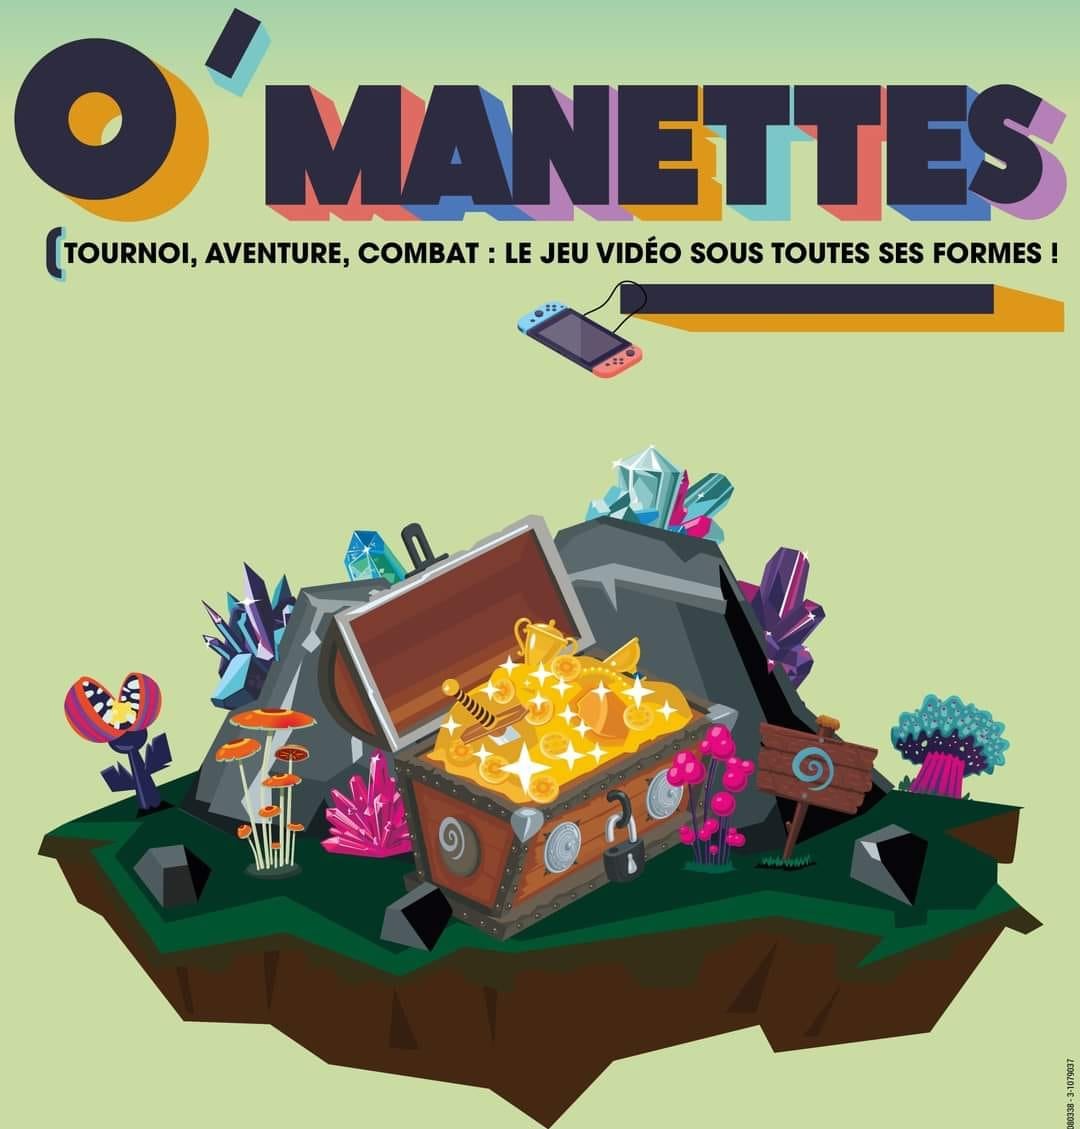 O’Manettes !